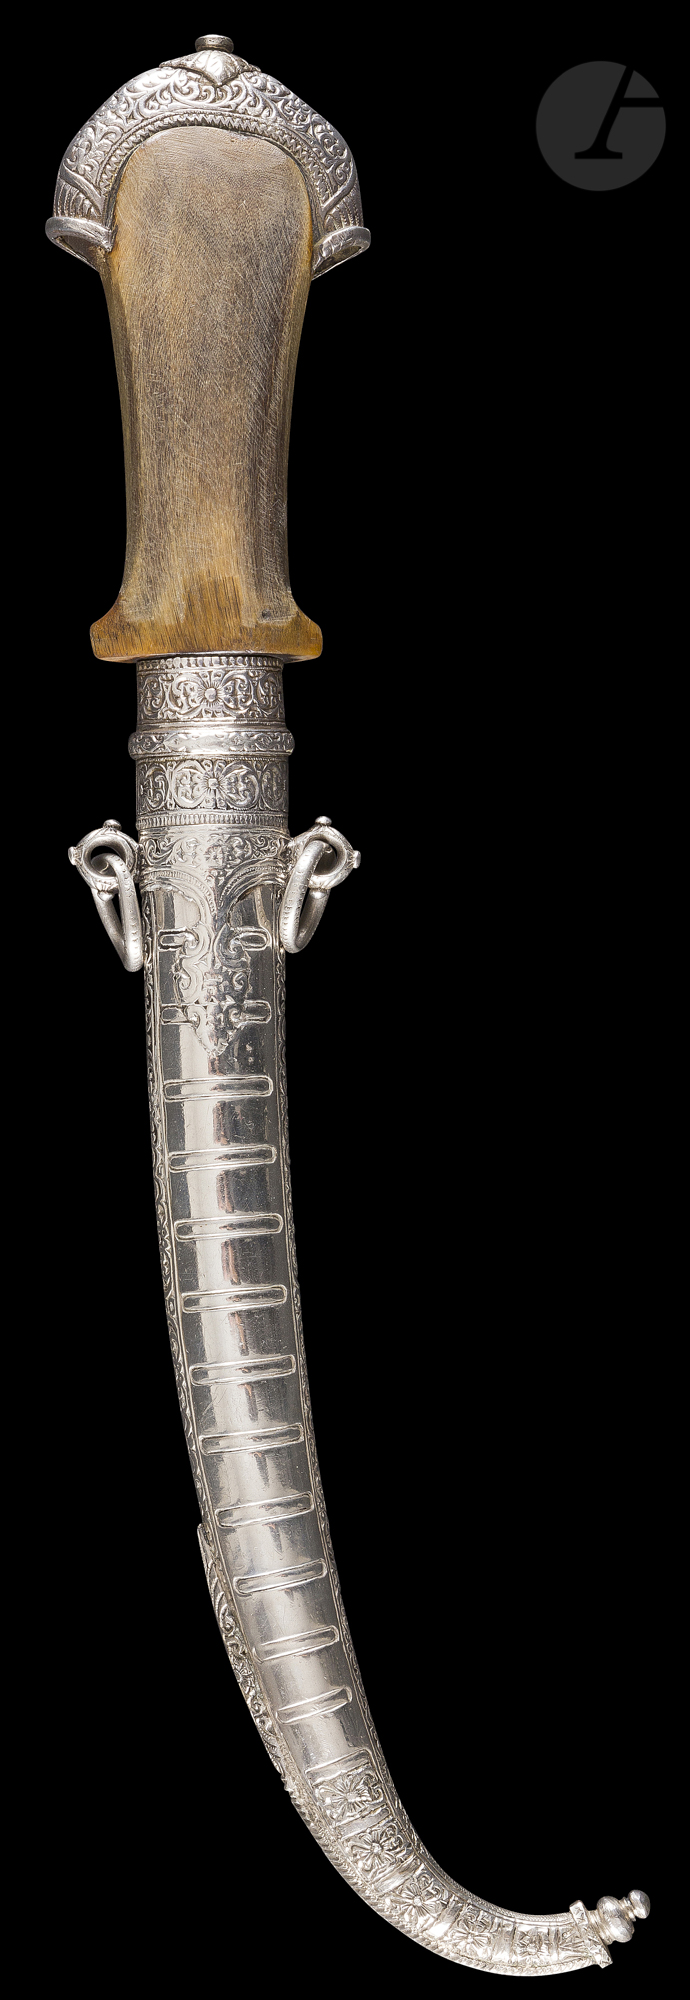 Poignard, koumiyya, Maroc, fin XIXe siècle - début XXe siècle Lame courbe en acier ciselé de